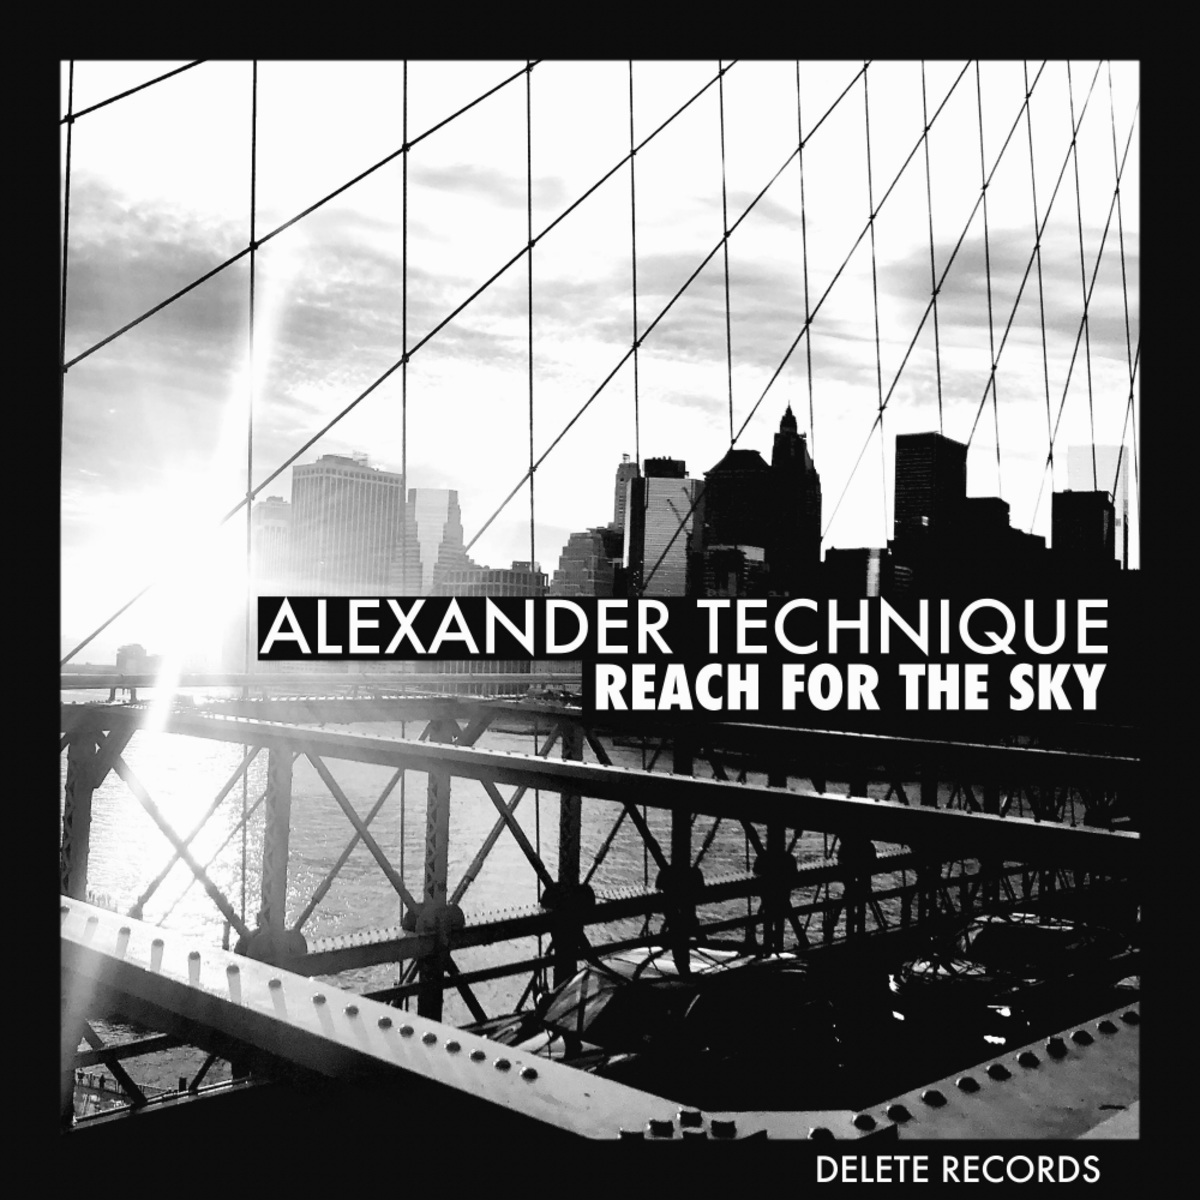 Alexander Technique - Reach For The Sky / Delete Records